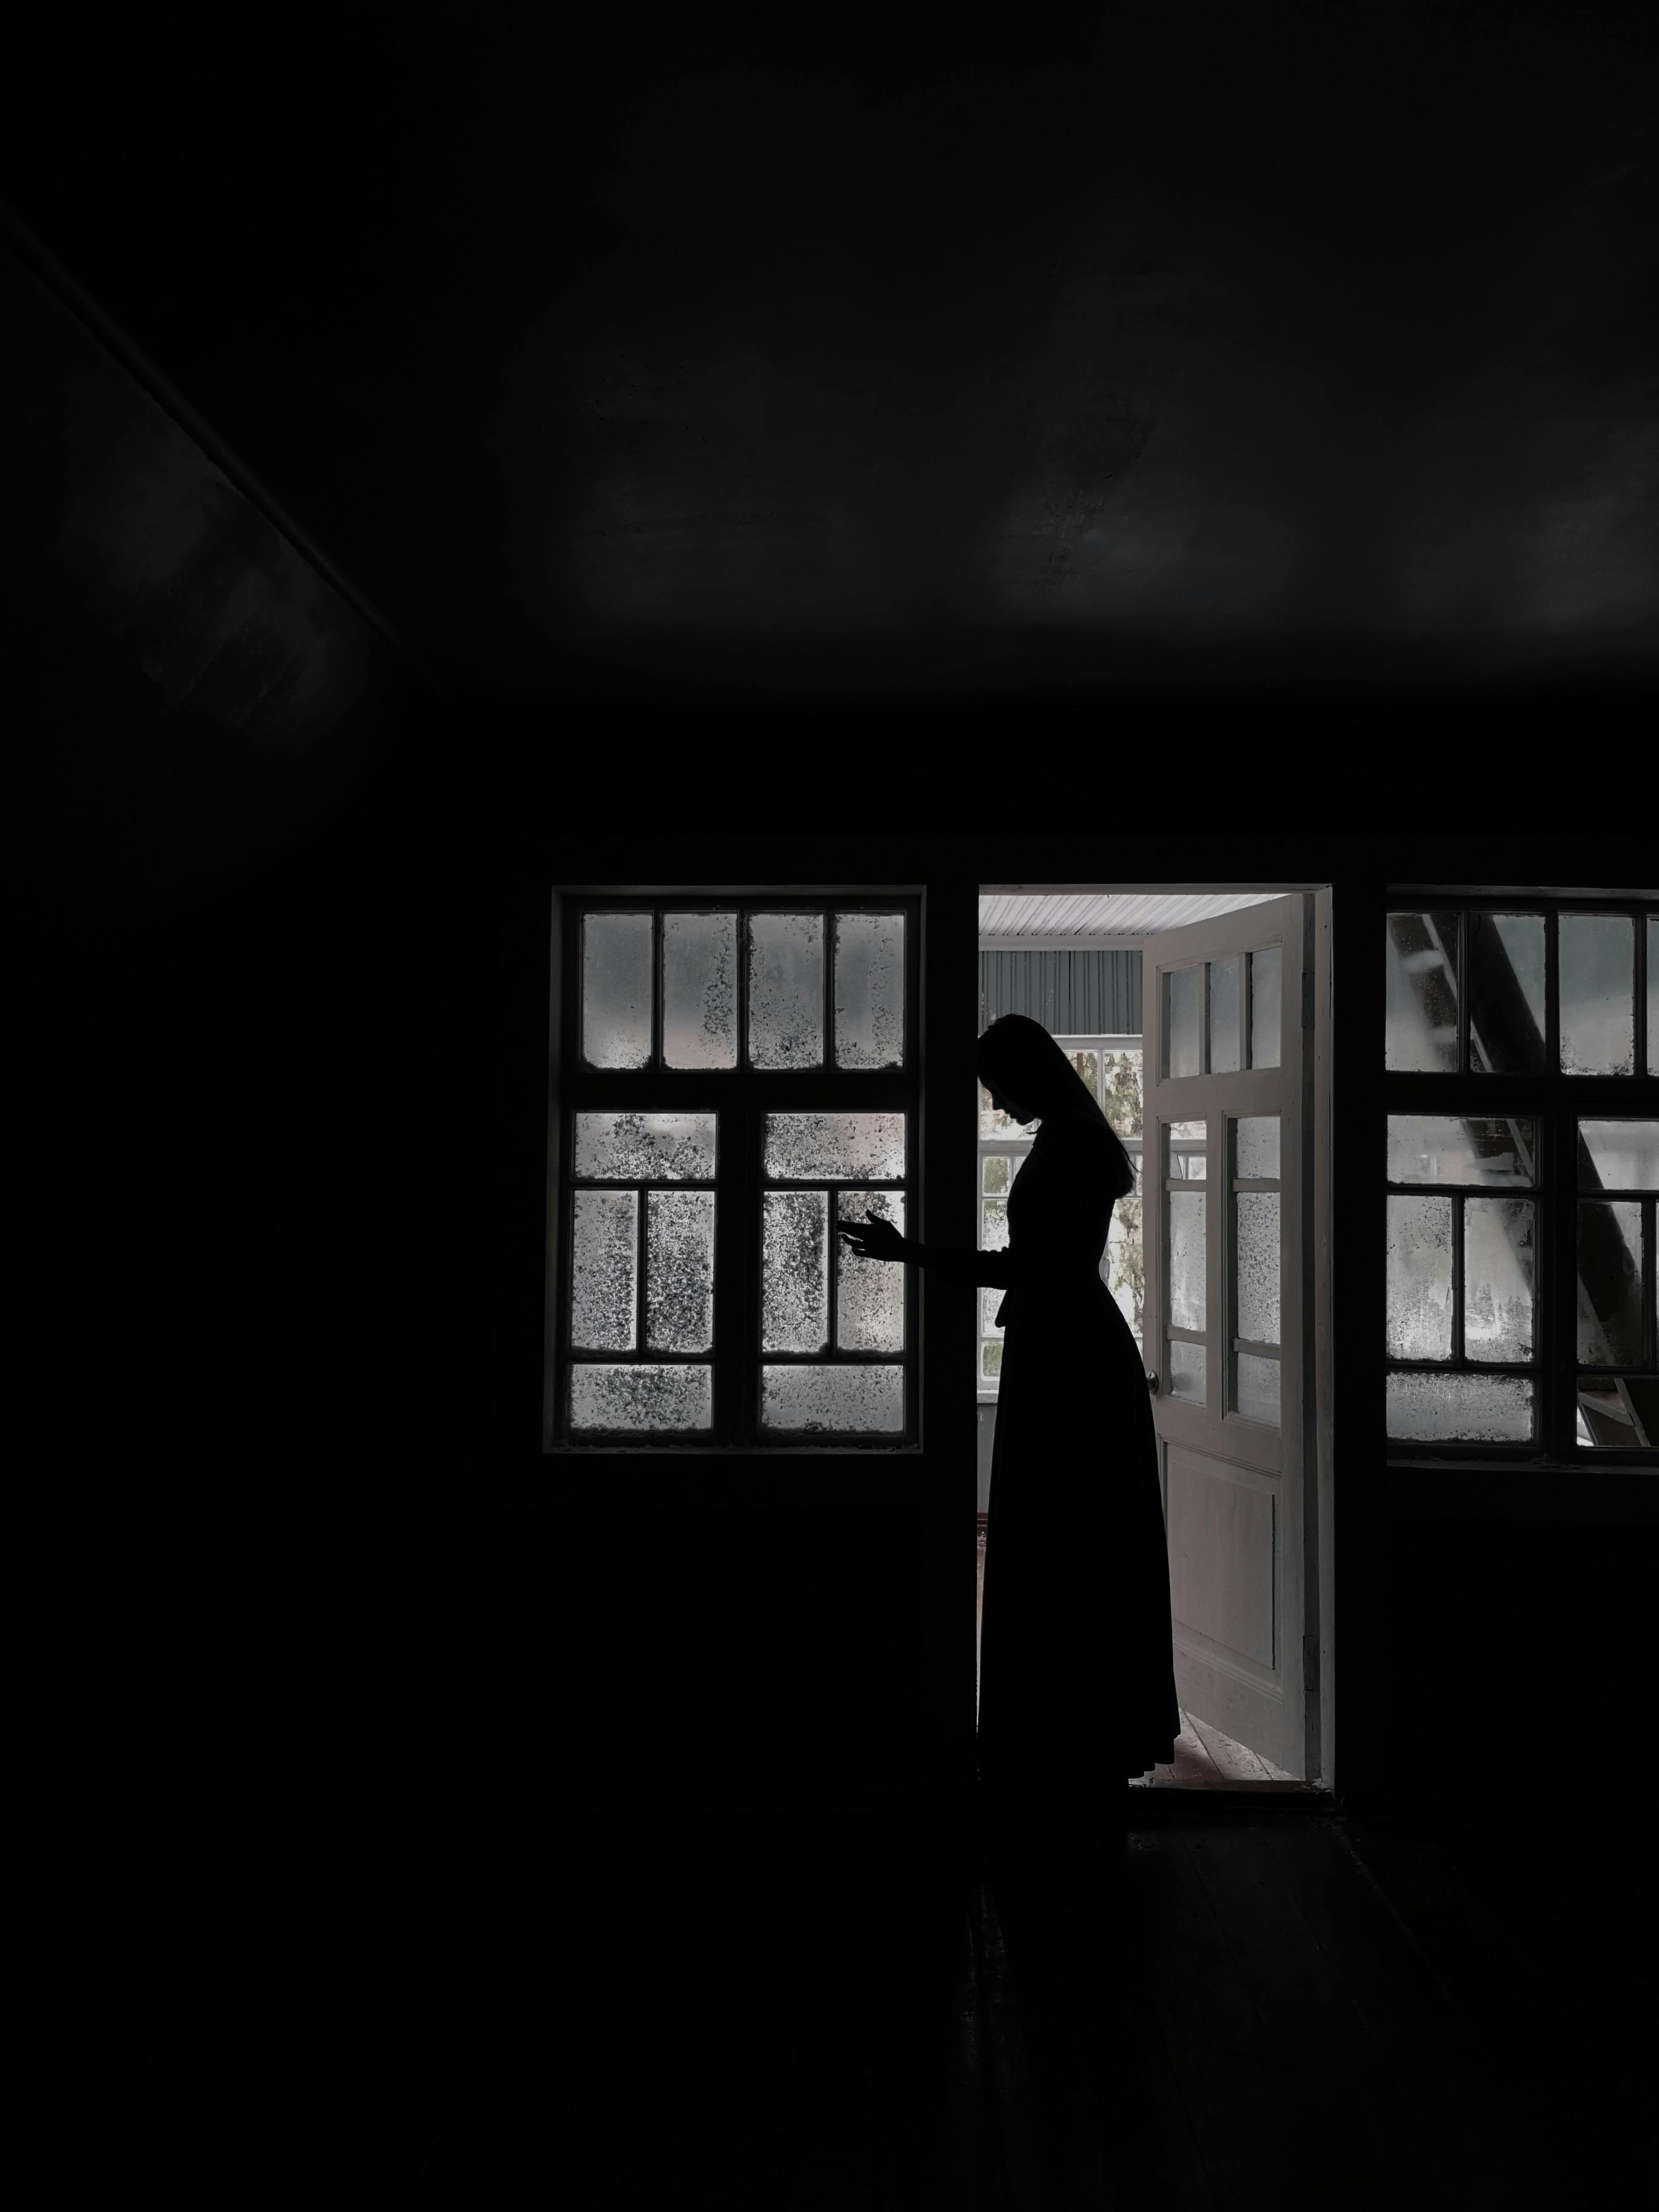 A woman in a long dress standing in doorway | Source: Pexels